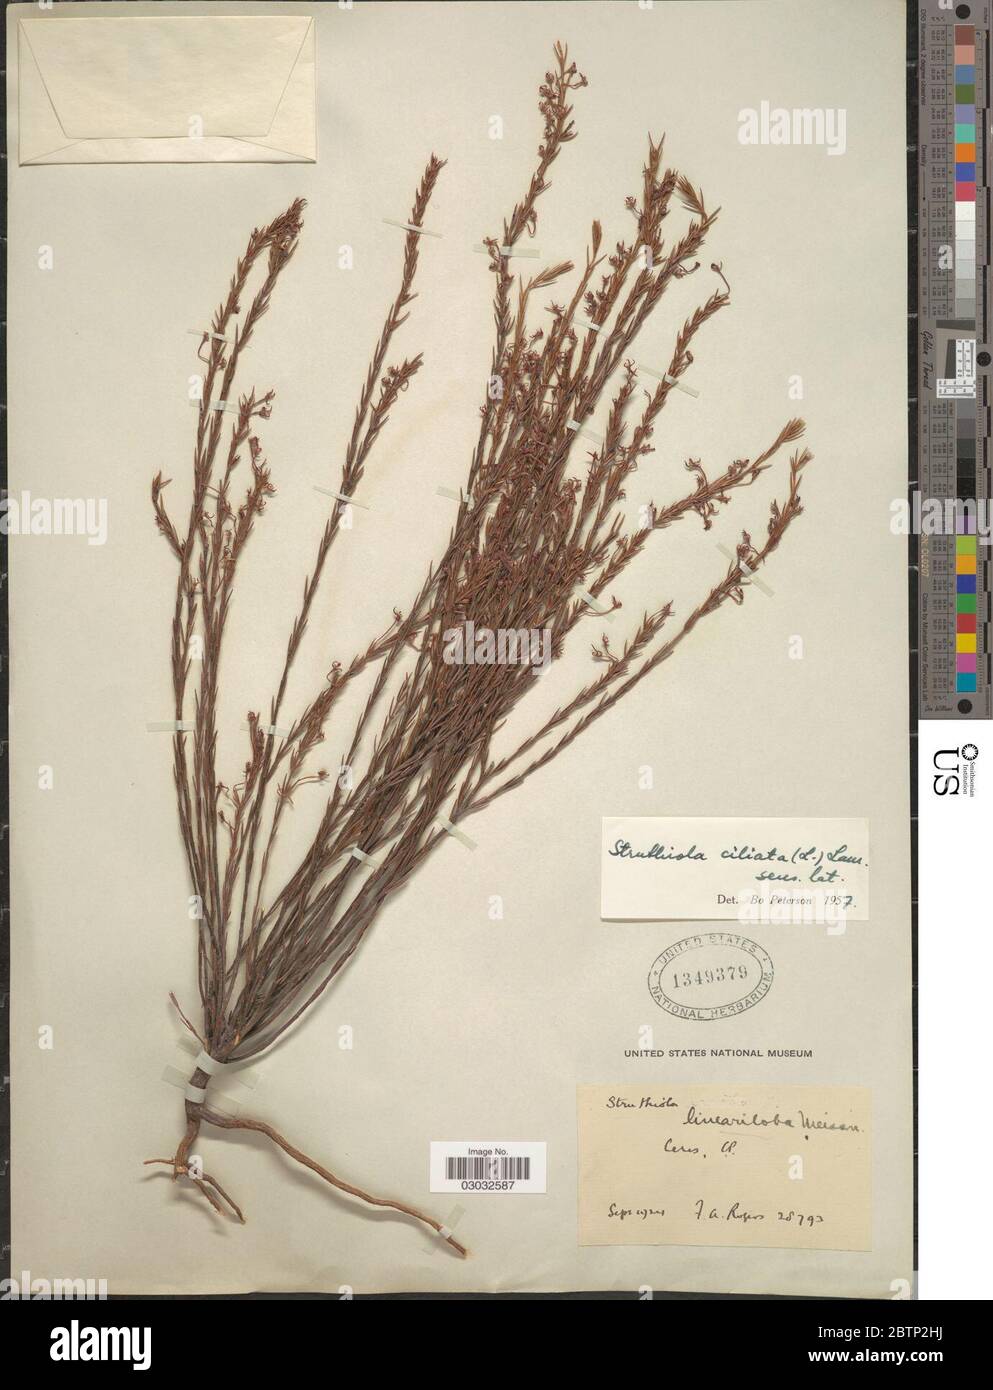 Struthiola ciliata L Lam. Stock Photo